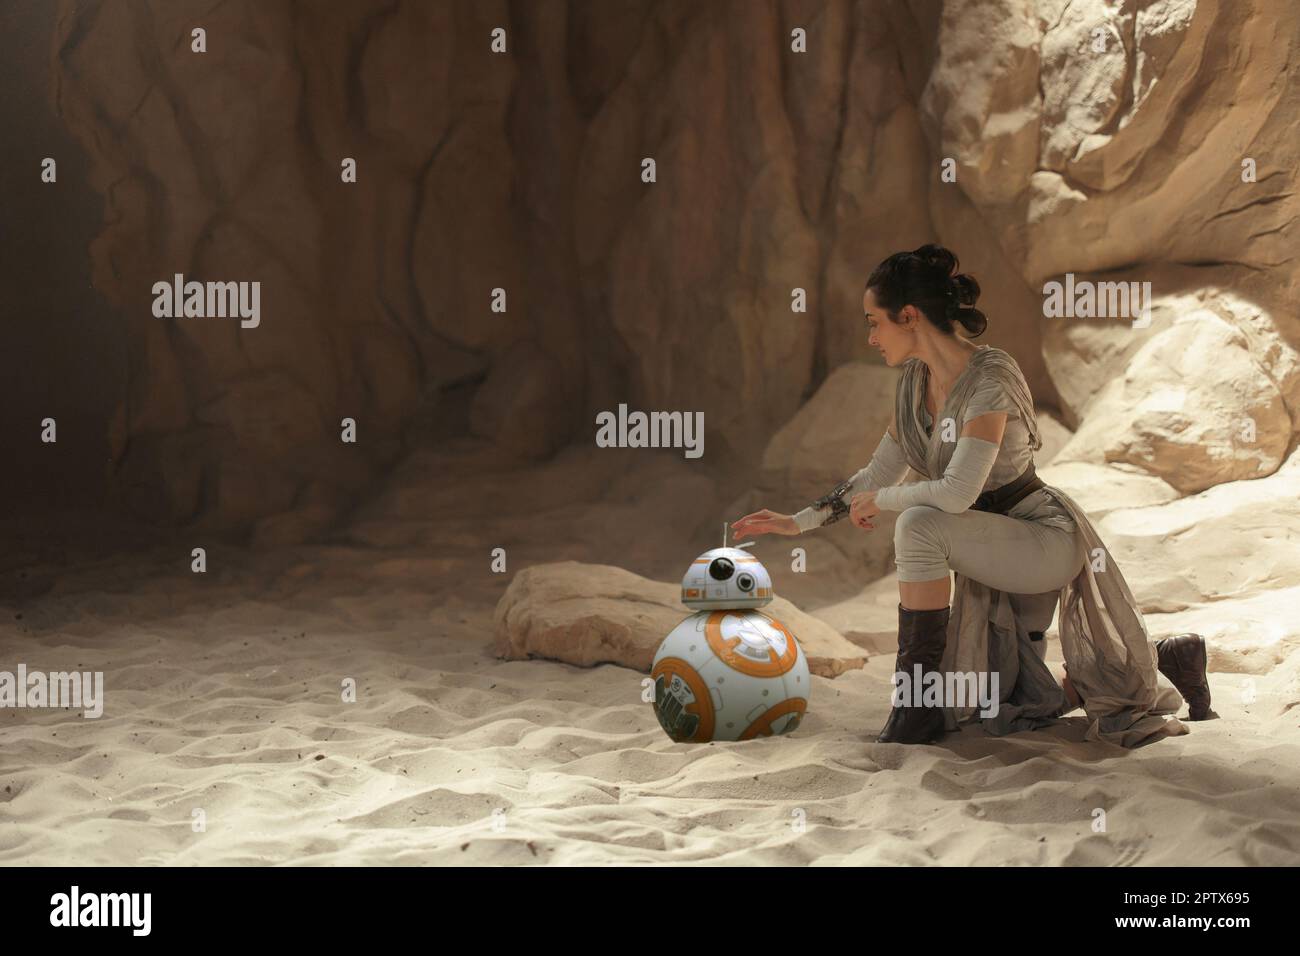 Disney Star Wars The Force Awakens BB-8 Astro Droid